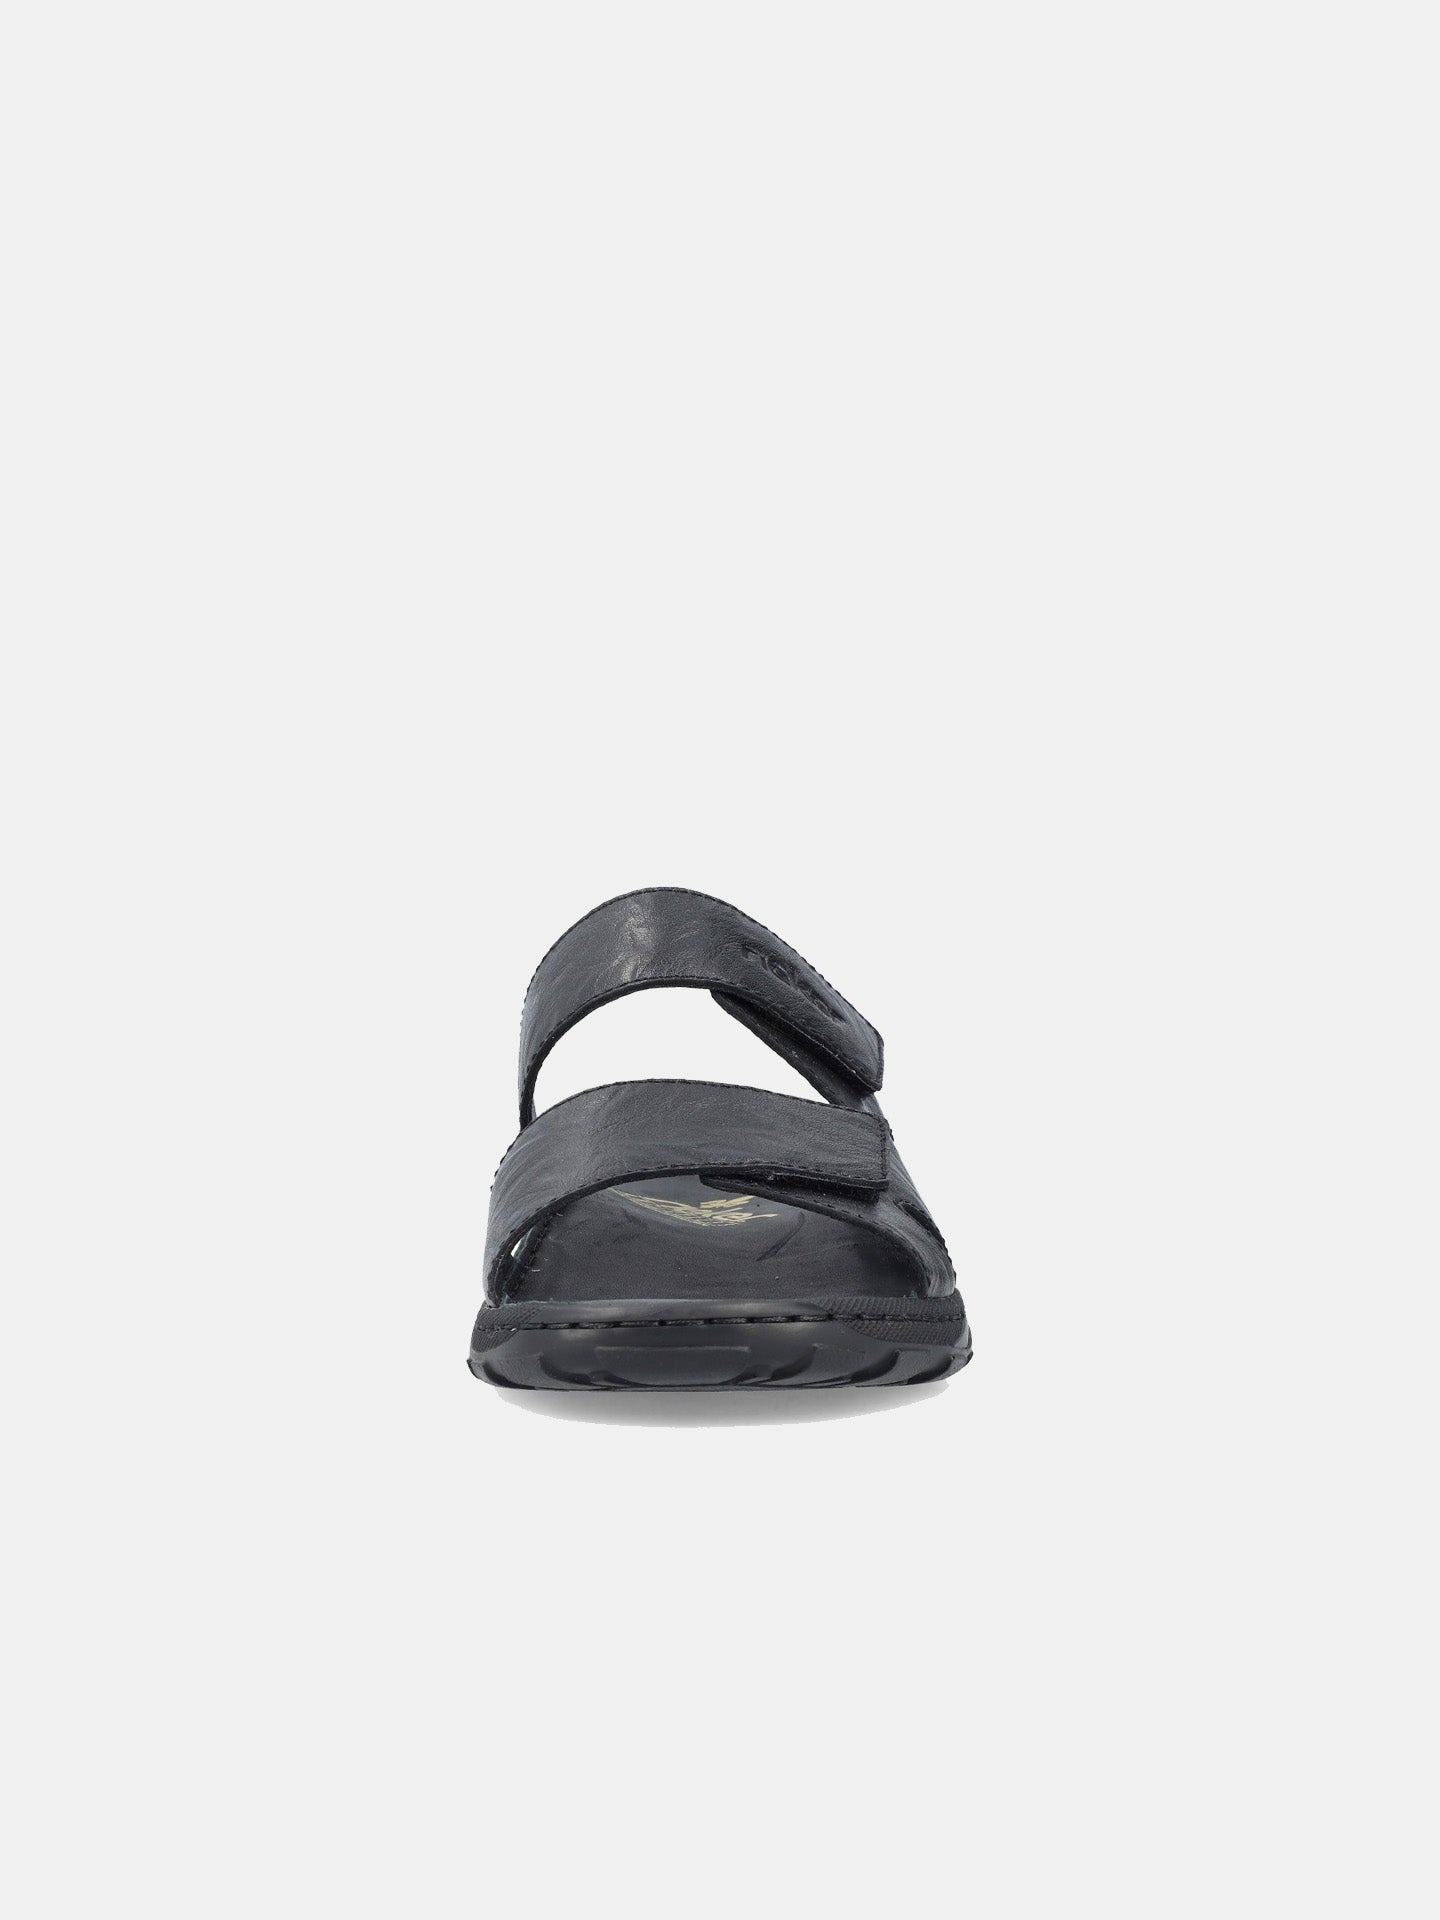 Rieker 26072-01 Men's Sandals